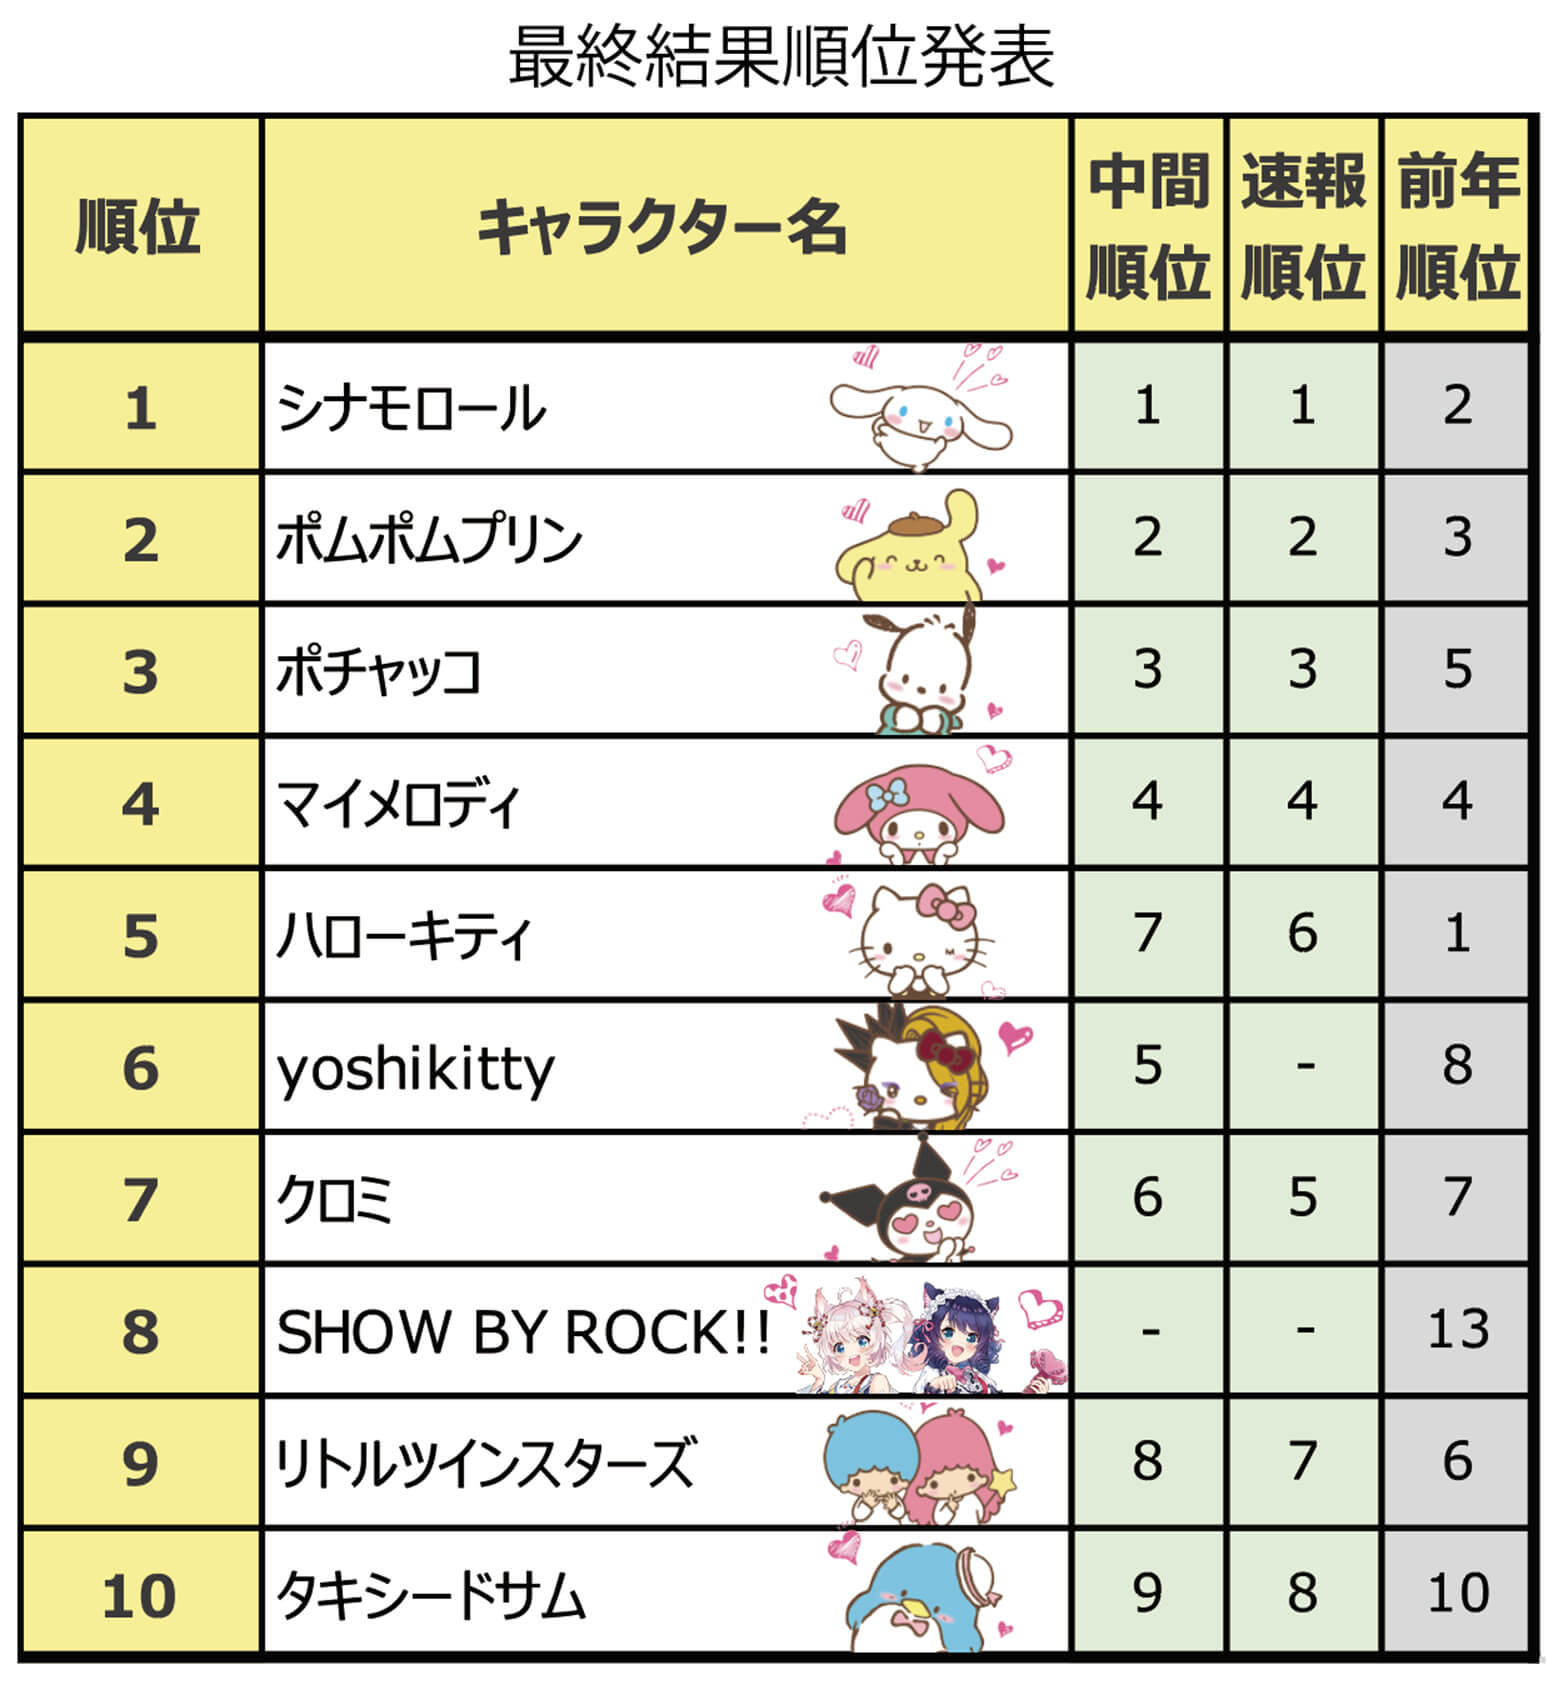 Cinnamoroll is the winner of the 2020 Sanrio Ranking Contest! : r/sanrio